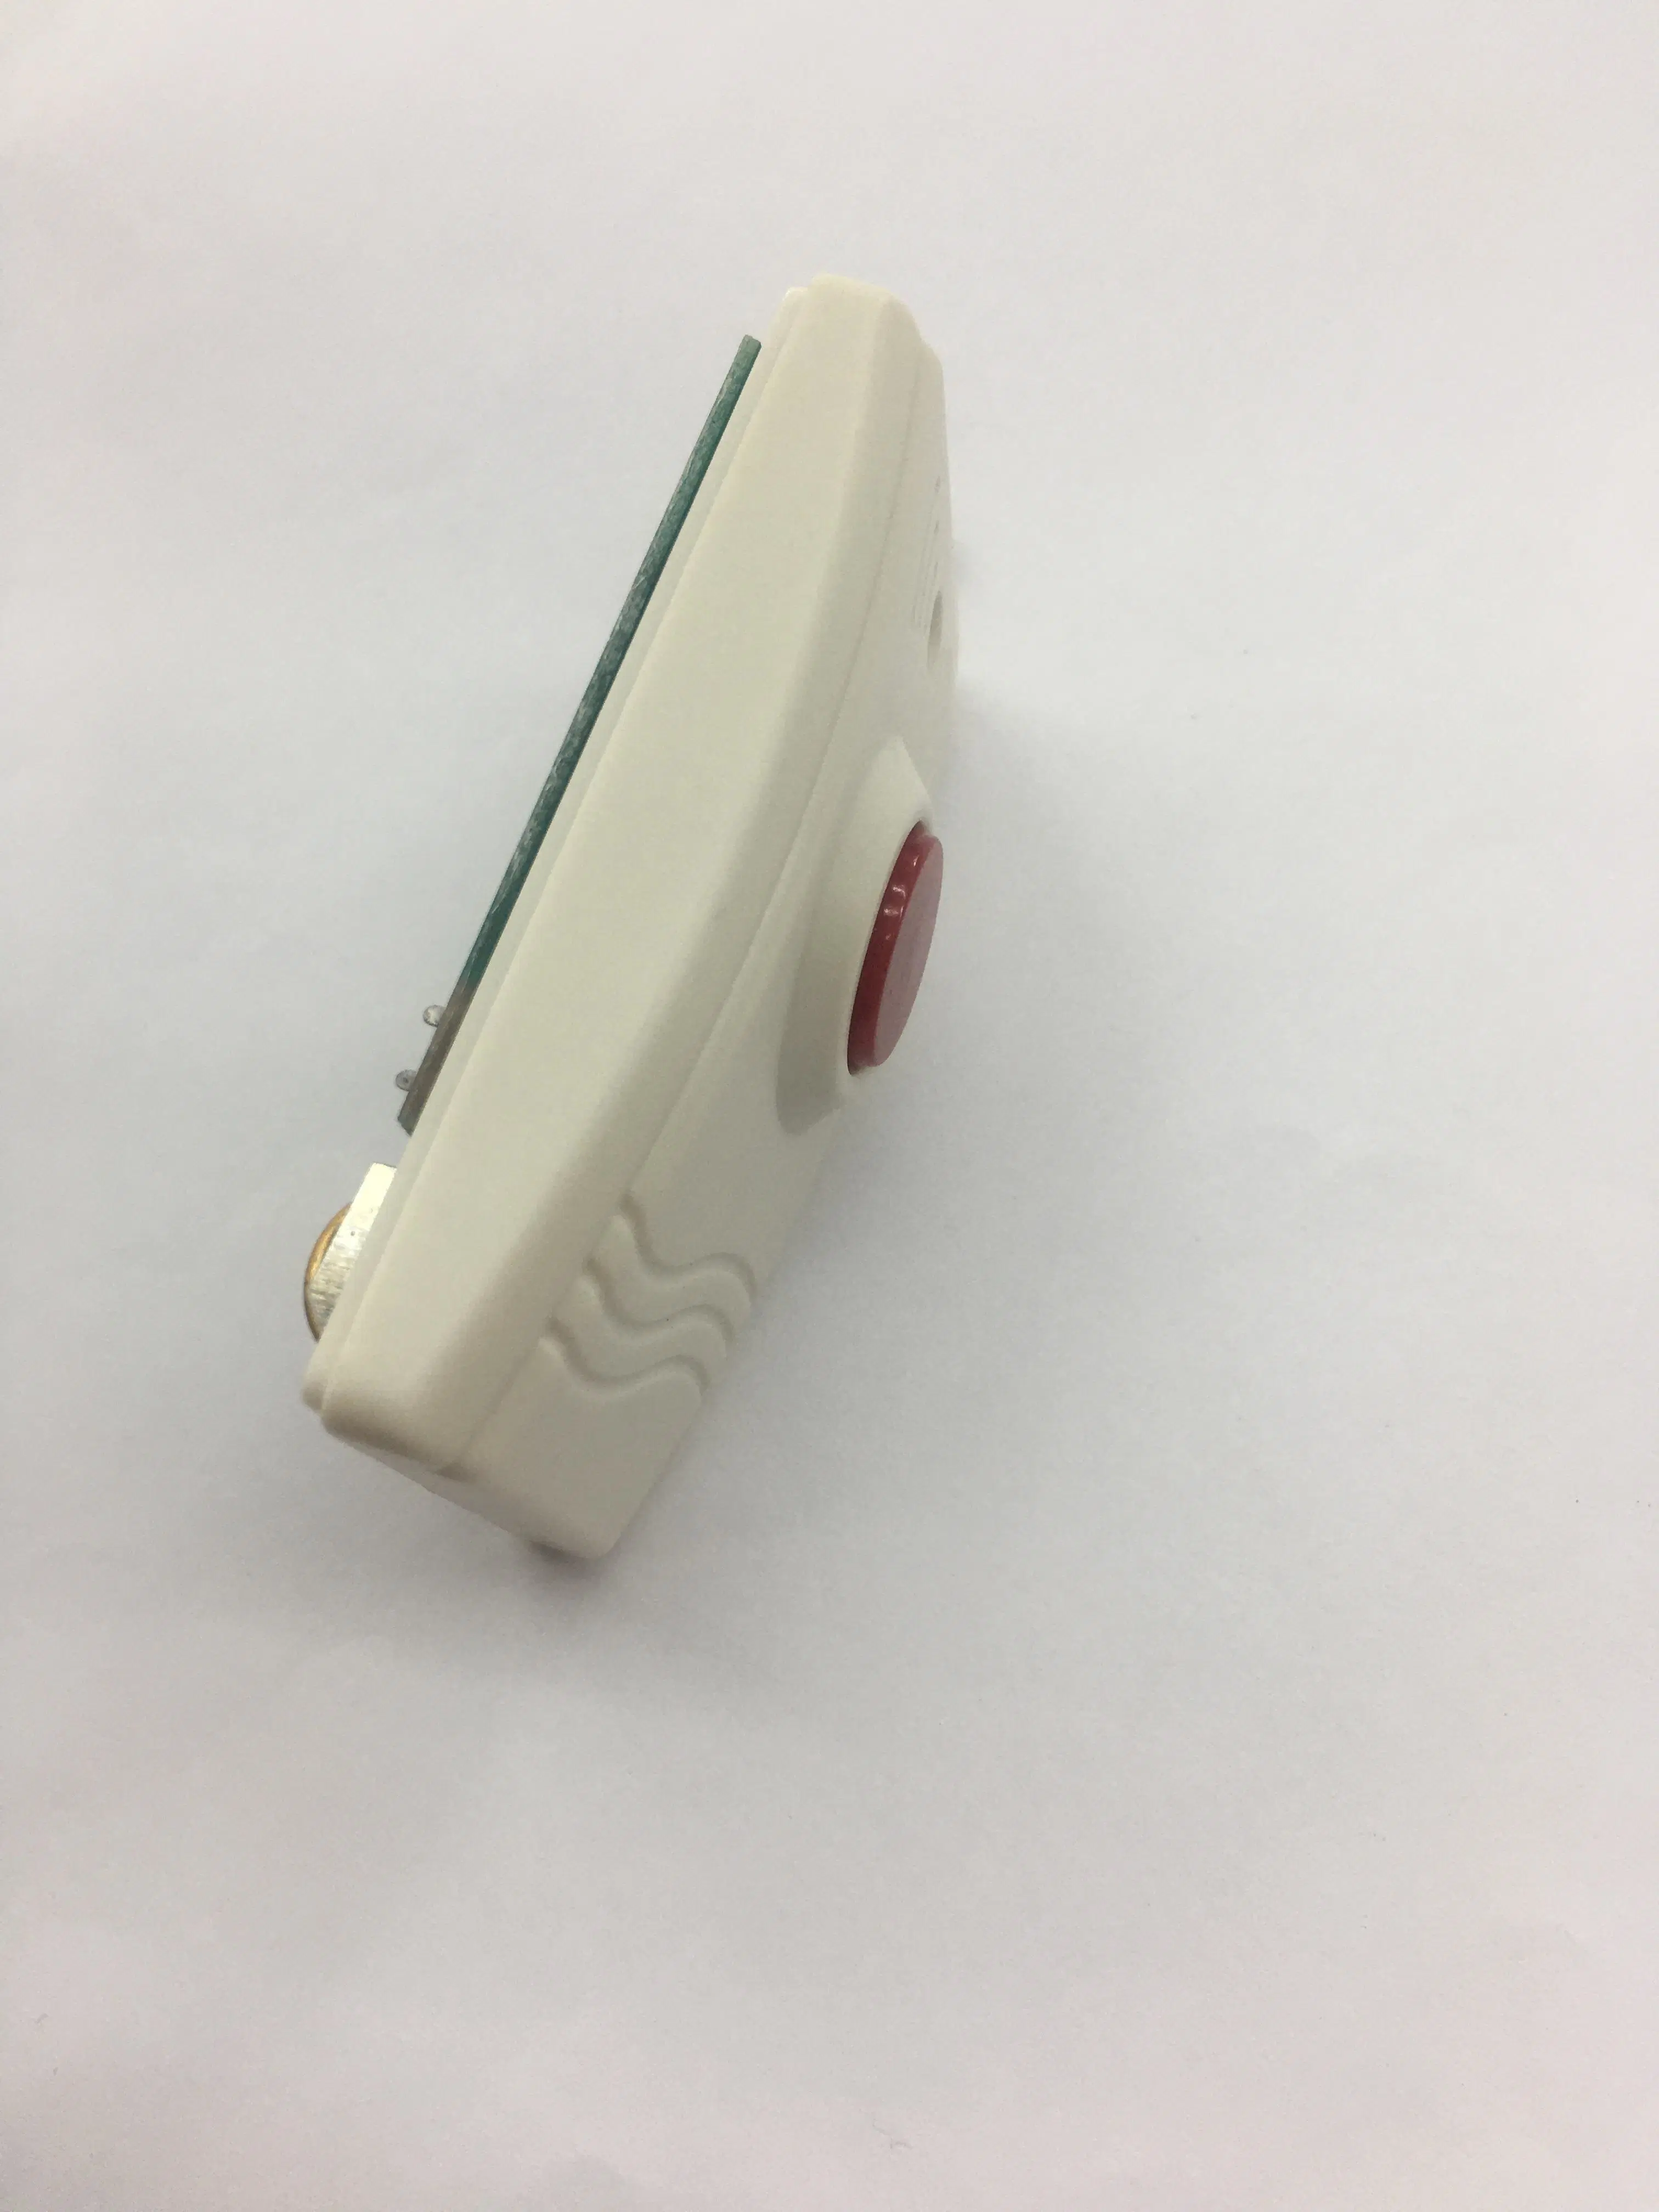 Wireless Sos Panic Button for Emergency Alarm